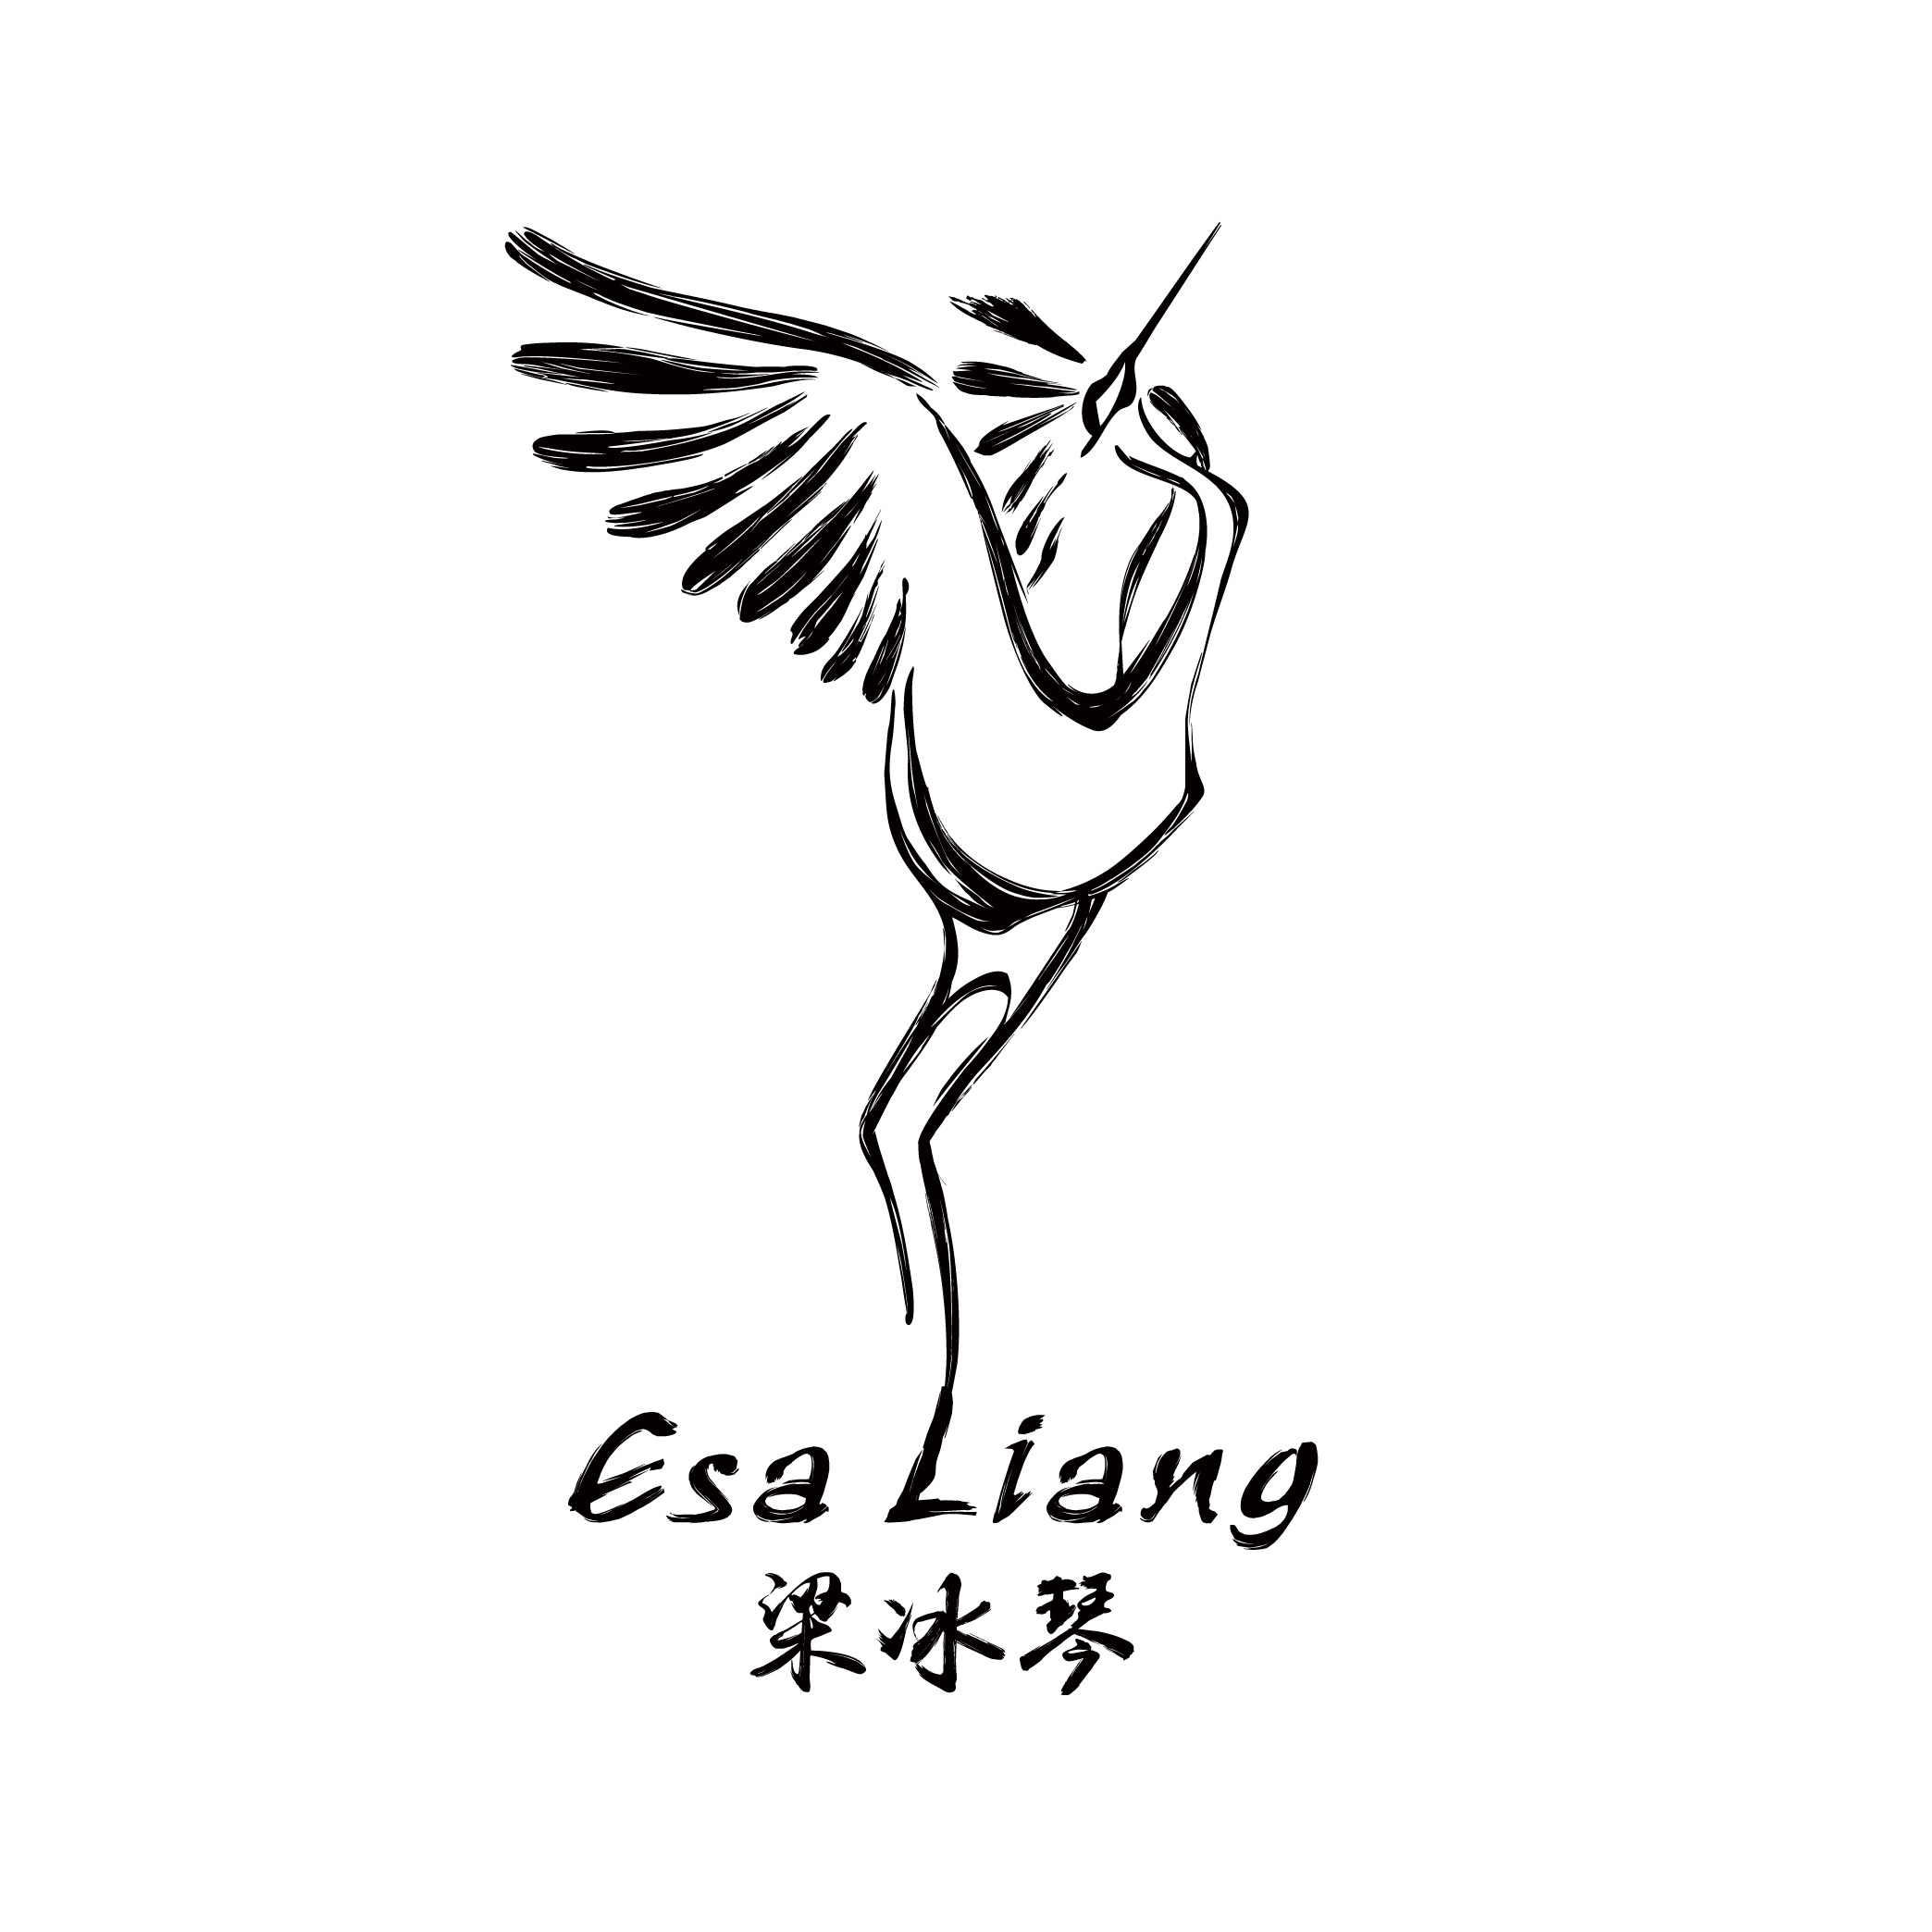 http://macaofashiongallery.com/wp-content/uploads/2019/08/Esa-Liang-logo-01-square.jpg